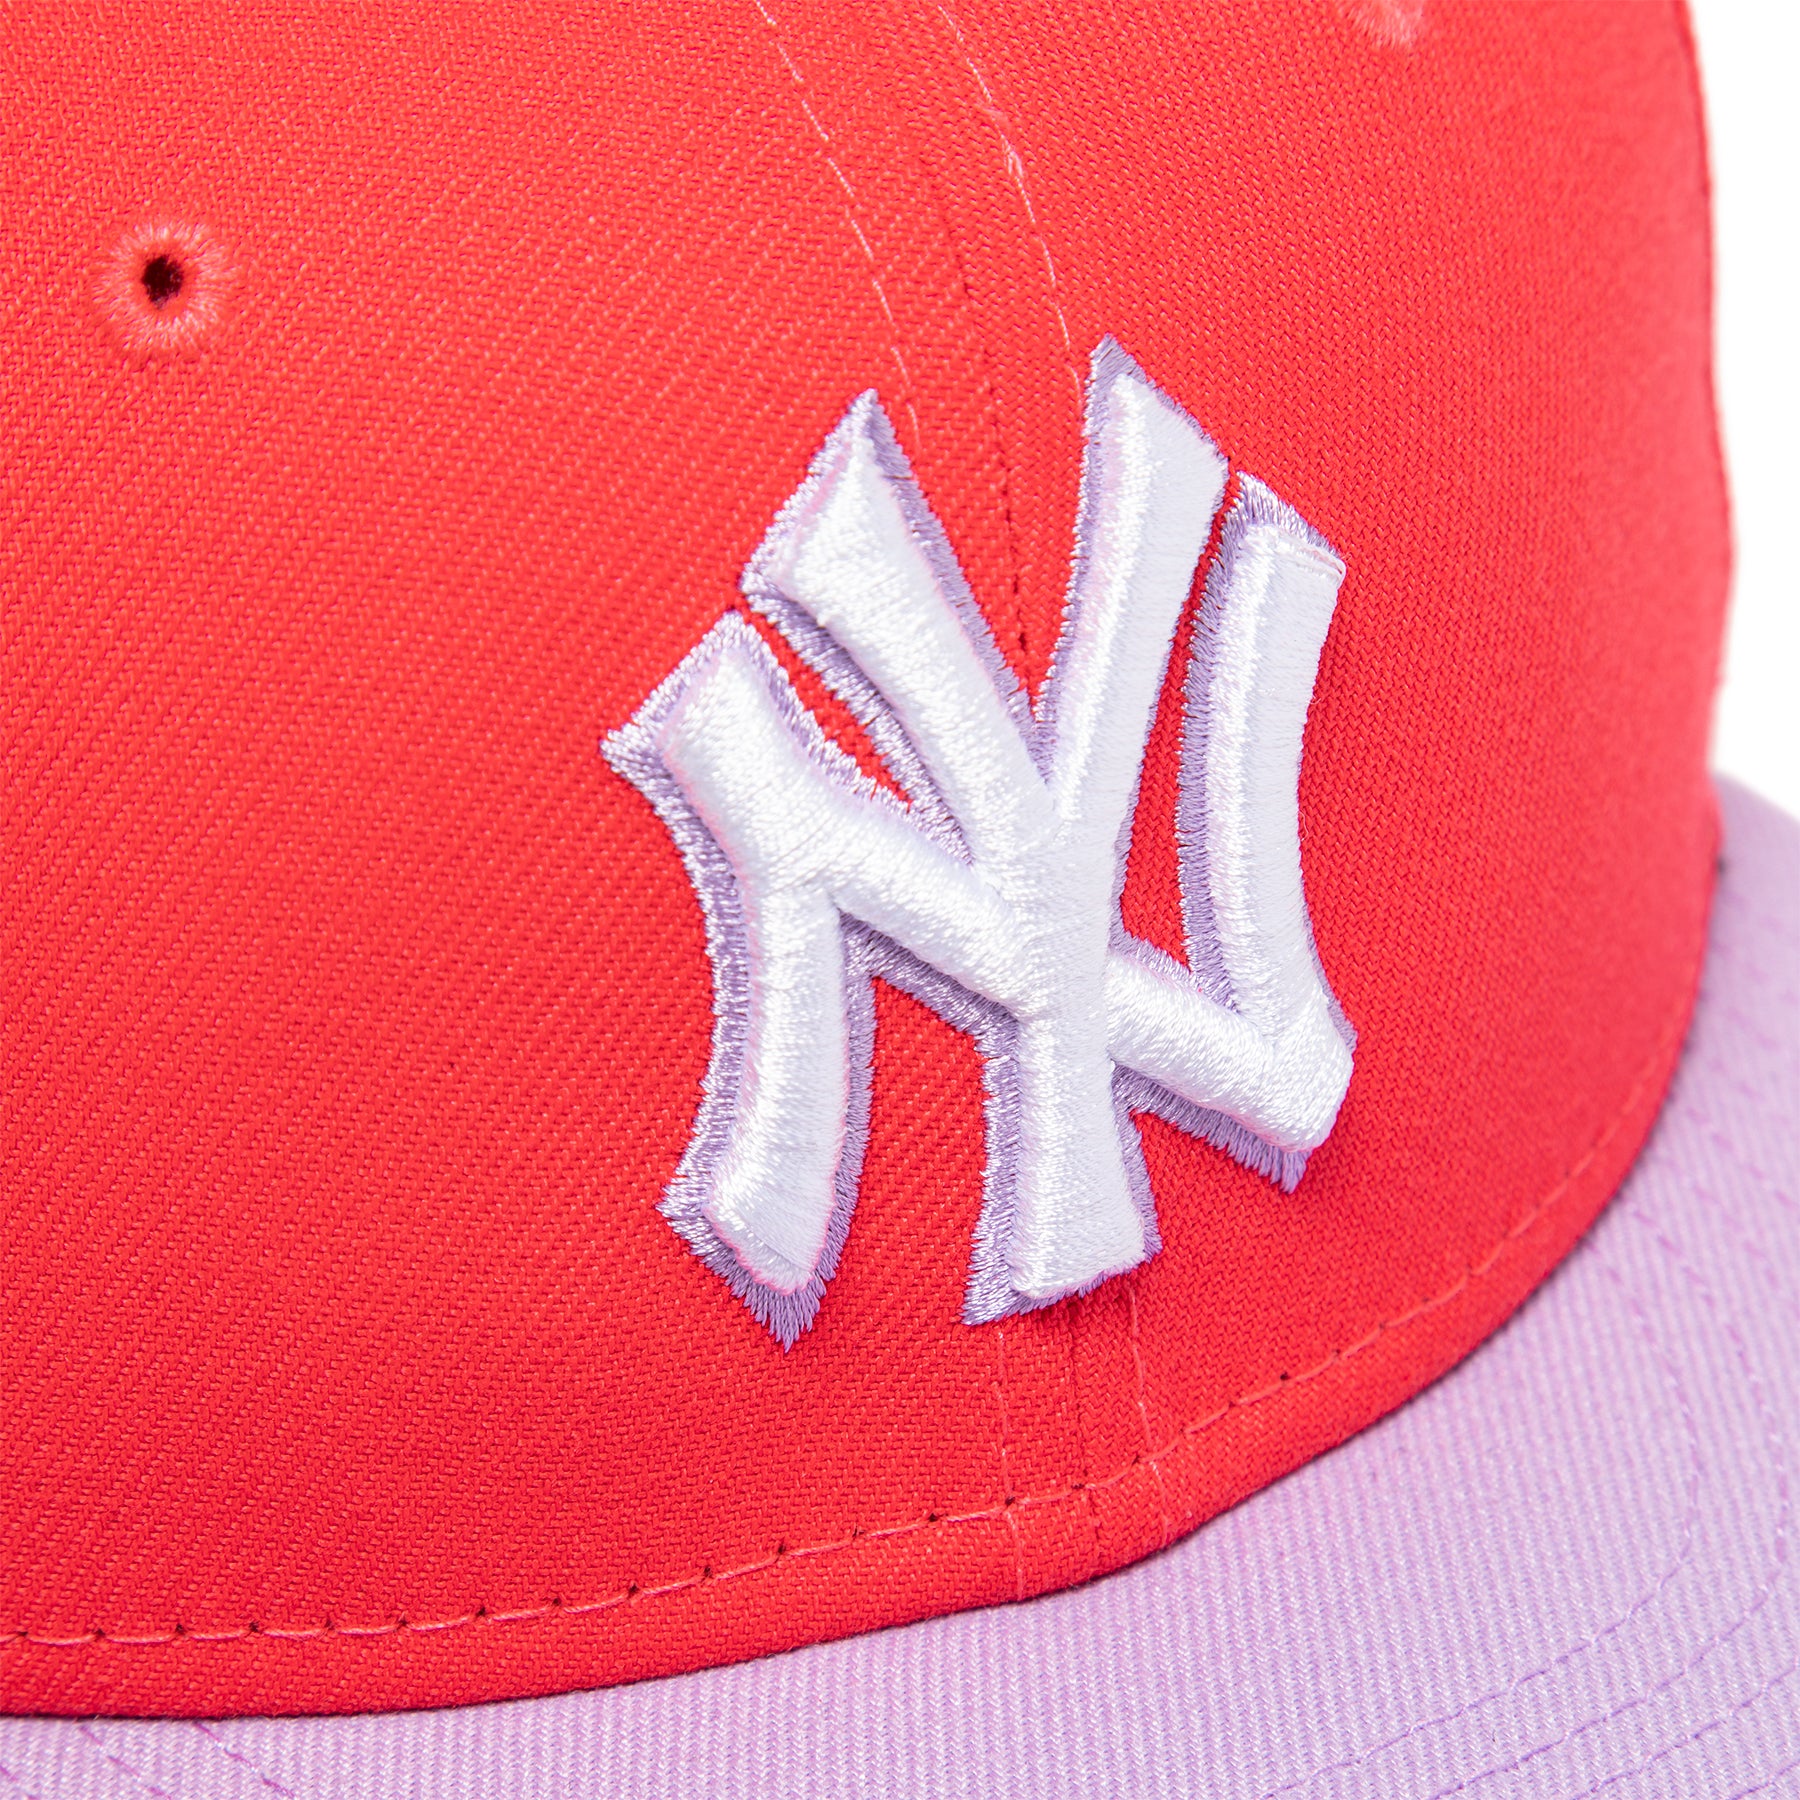 Cap New Era New York Yankees 9Fifty Mlb Lea. pink/white